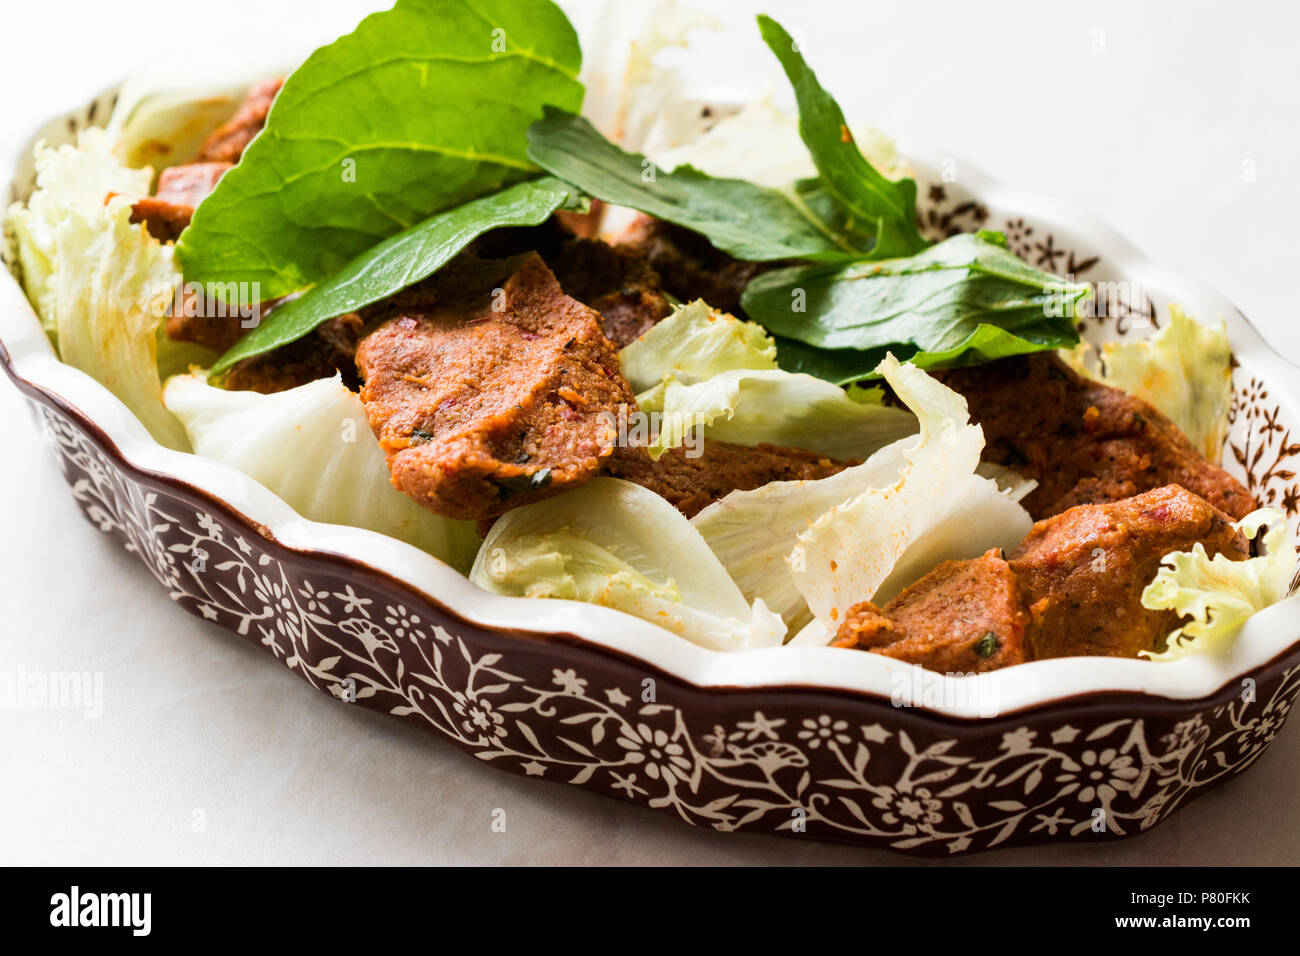 Turkish Food Cig Kofte with lettuce and Rocket Leaves or Arugula. Traditional Food. Stock Photo